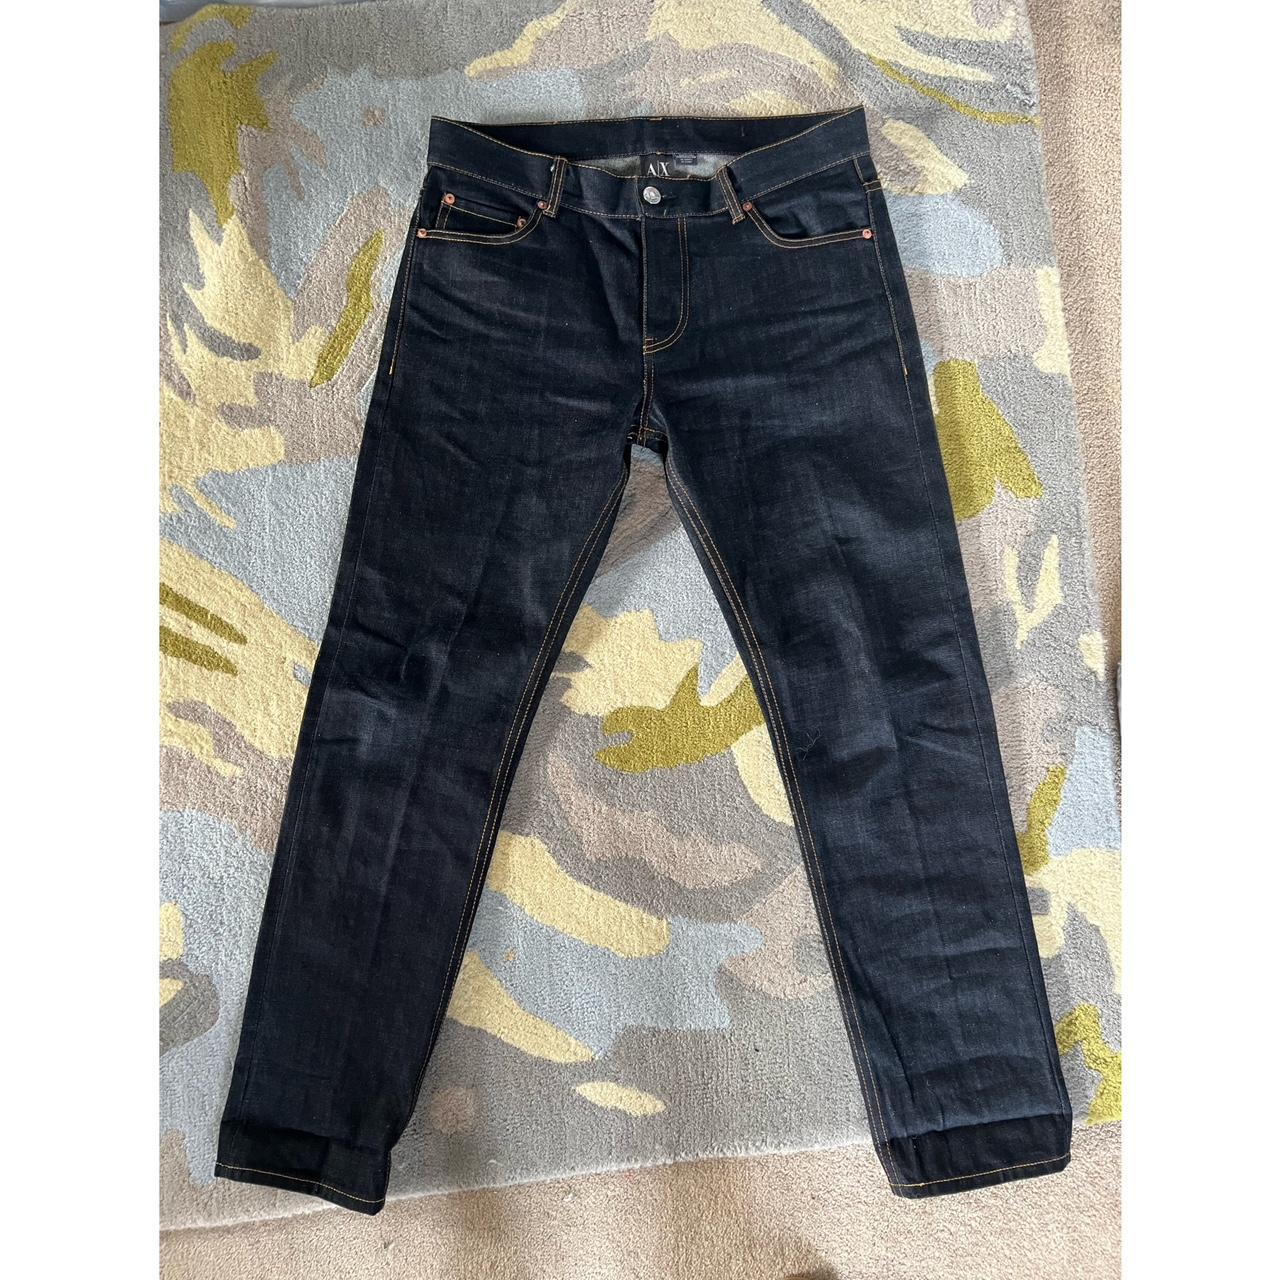 Armani Exchange Selvedge Denim Jeans Size 34W. Worn... - Depop